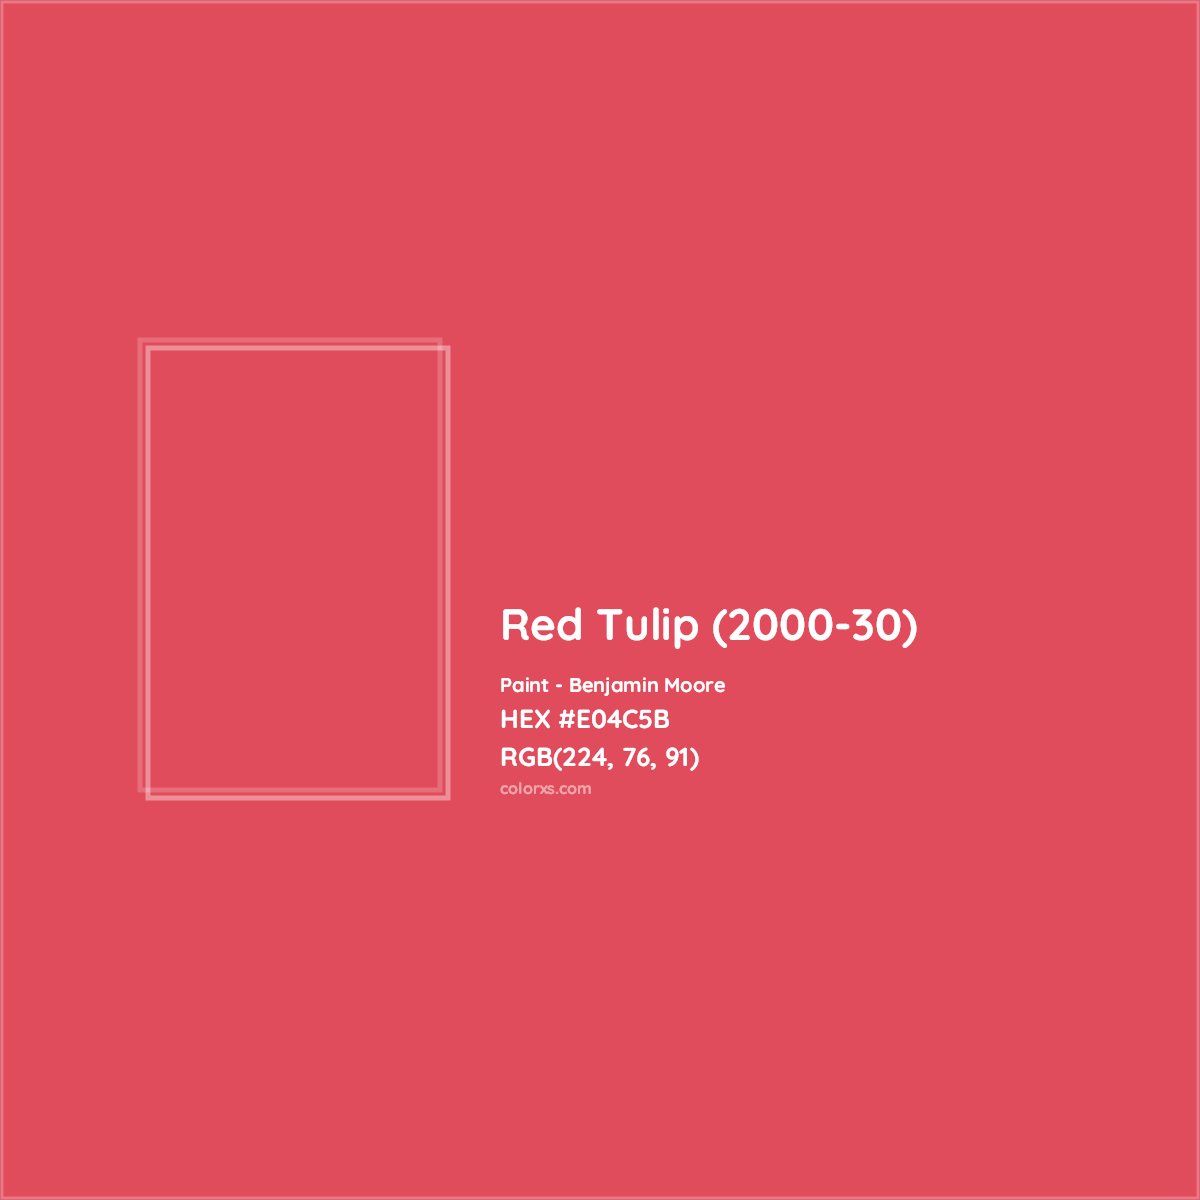 HEX #E04C5B Red Tulip (2000-30) Paint Benjamin Moore - Color Code